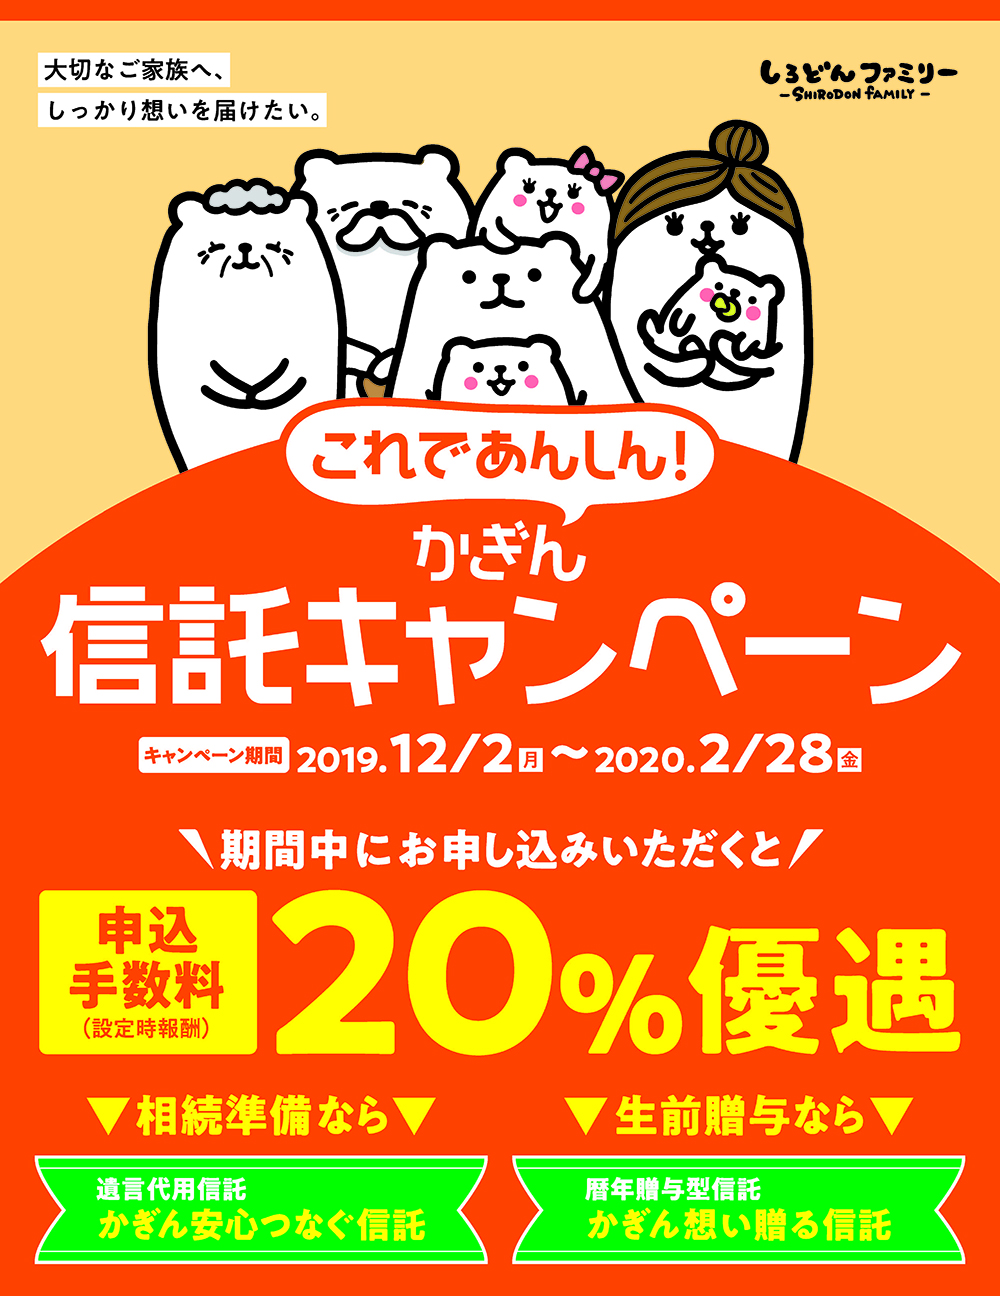 sintaku_campaign_20191202-1.jpg